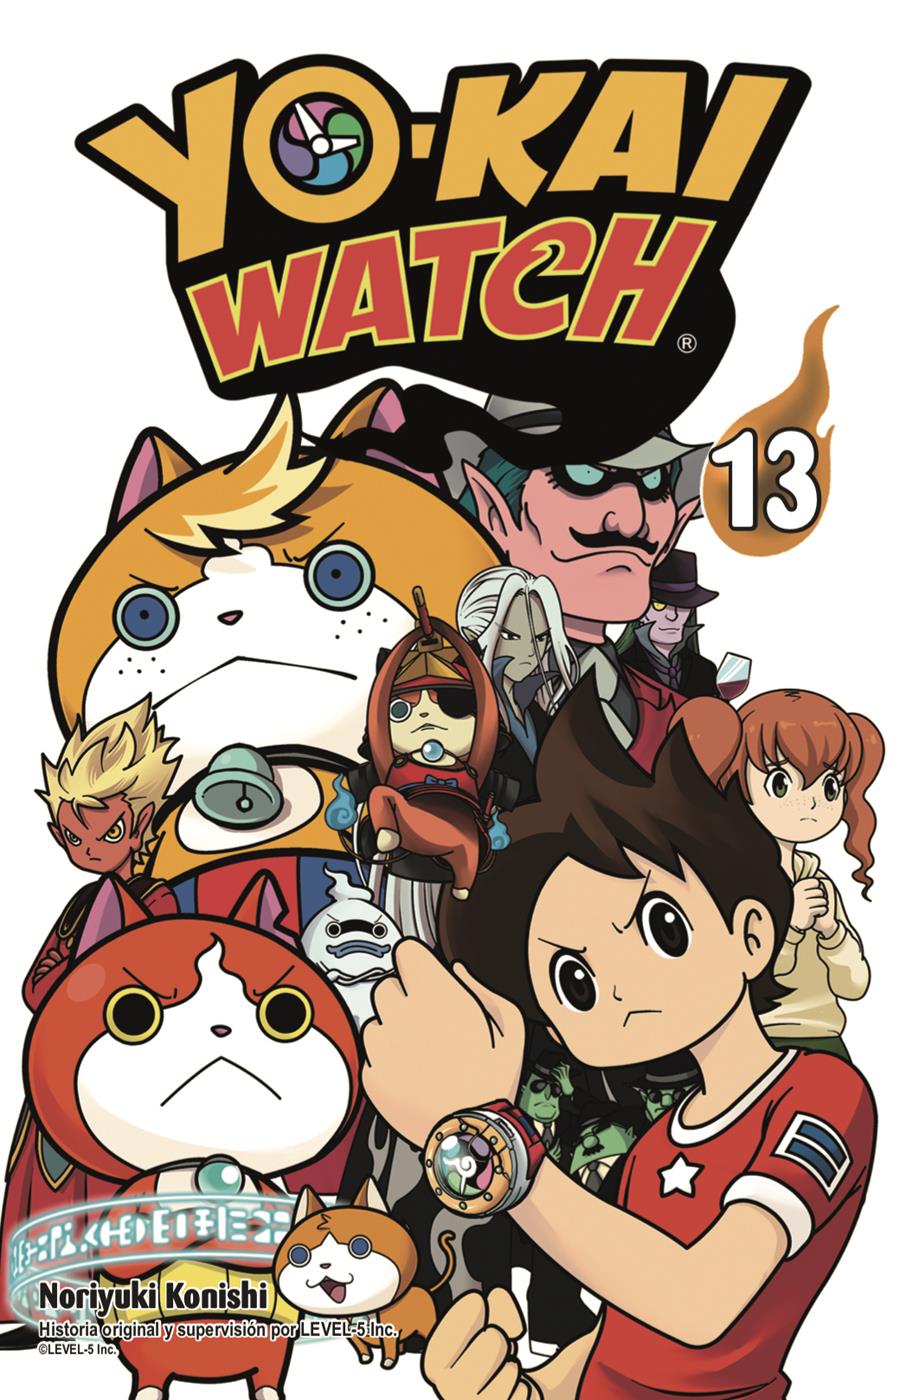 Yo-kai watch 13 | N0921-NOR39 | Noriyuki Konishi | Terra de Còmic - Tu tienda de cómics online especializada en cómics, manga y merchandising